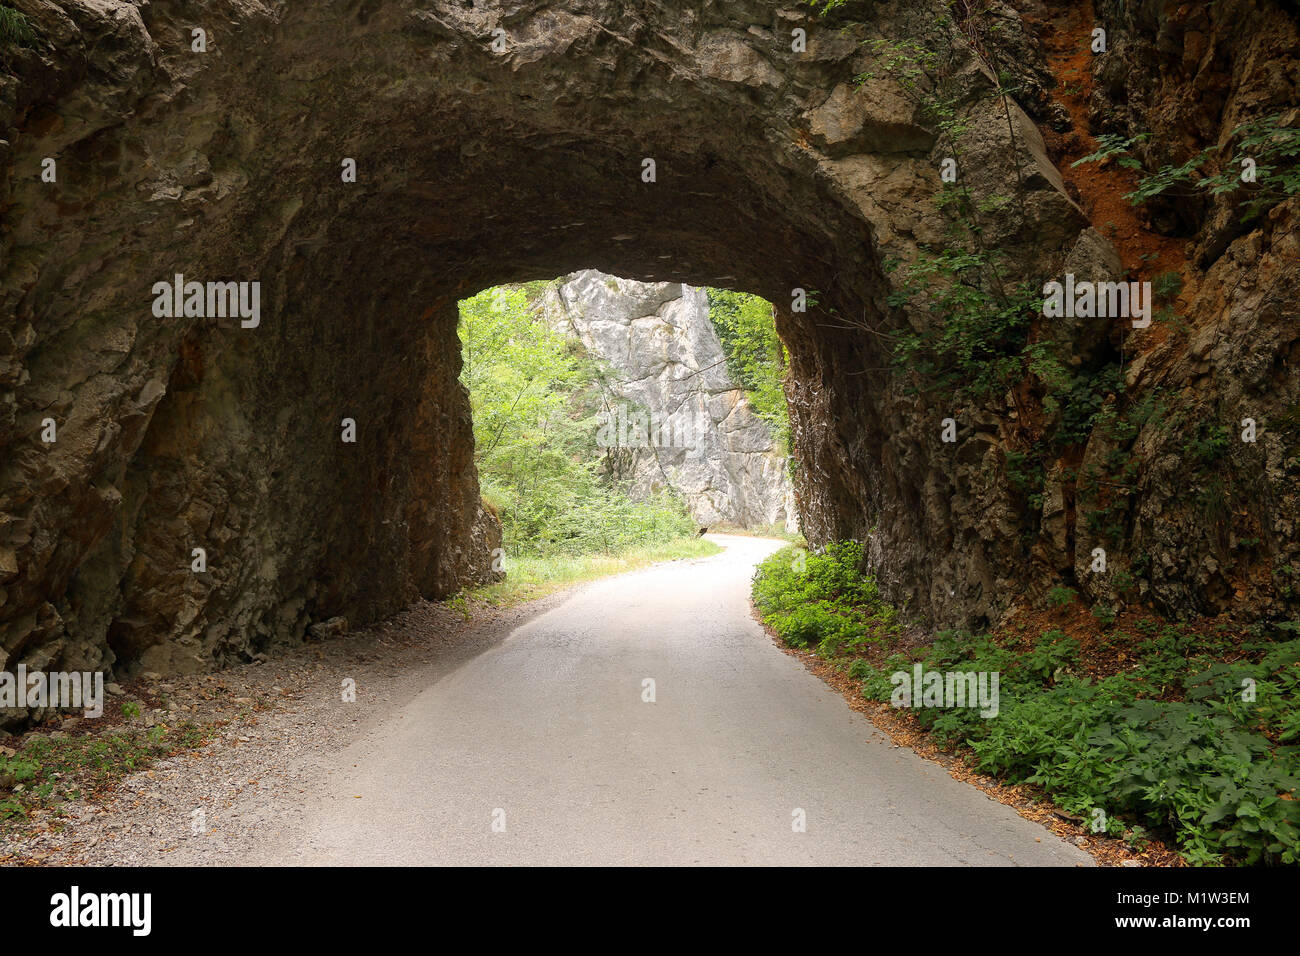 the mountain road passes through a stone tunnel Stock Photo